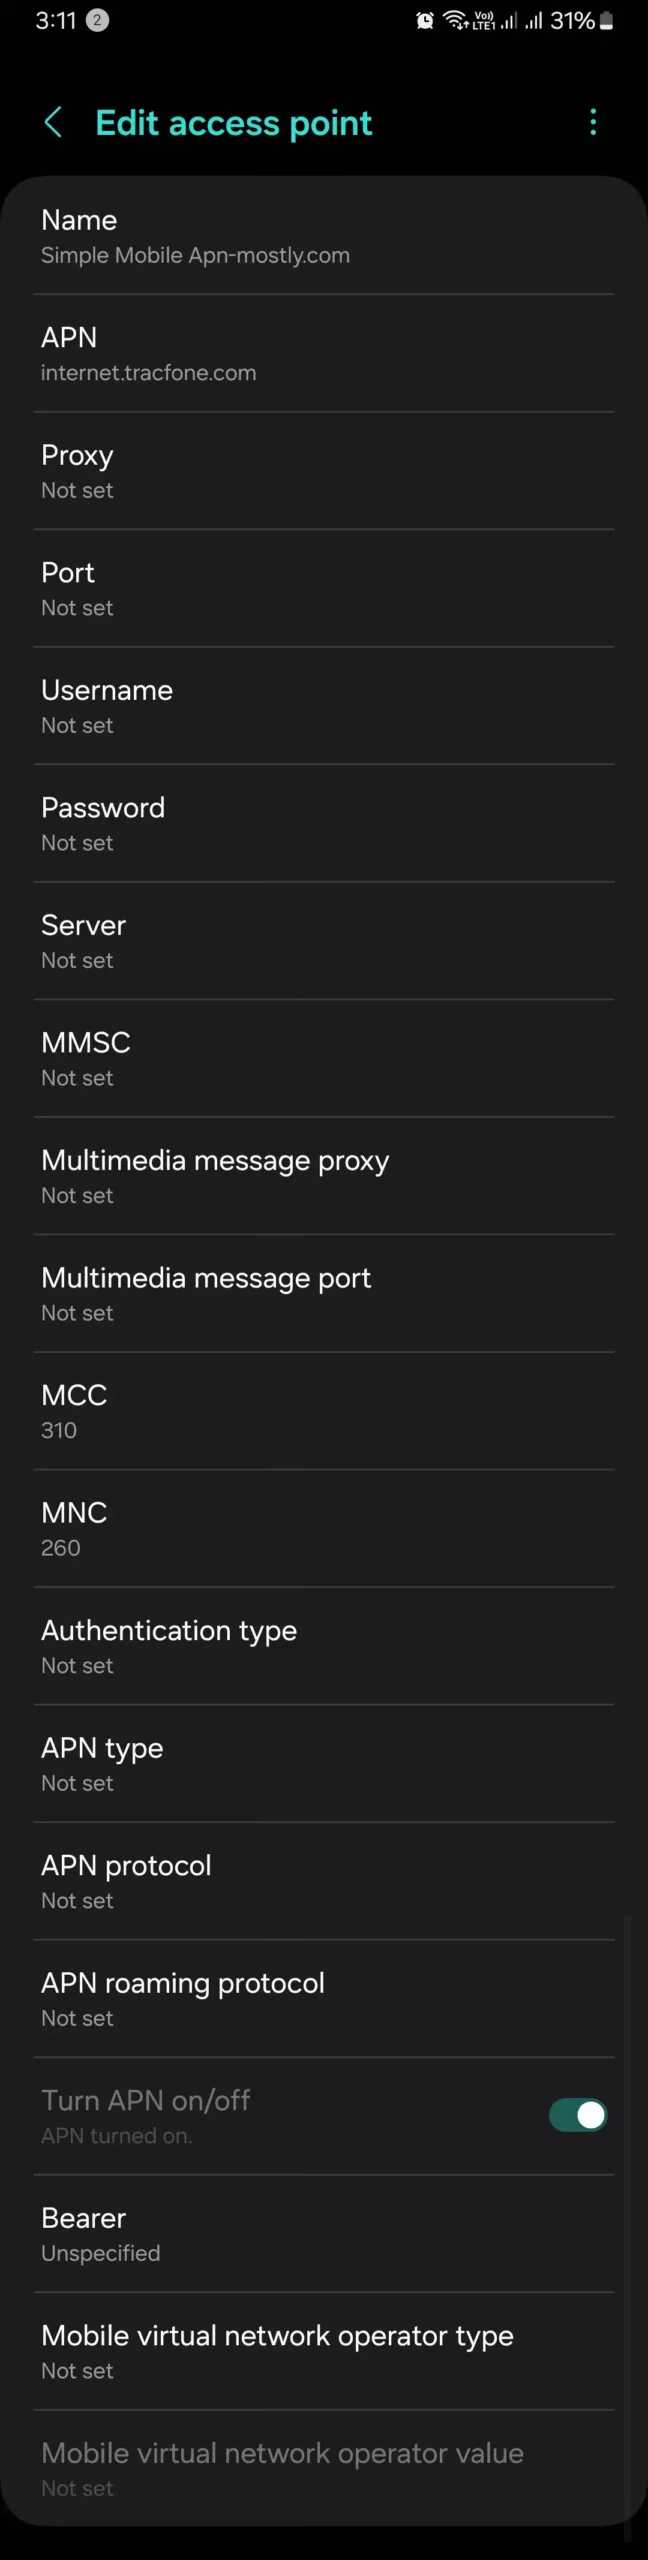 full screenshot of complete internet settings for simple mobile